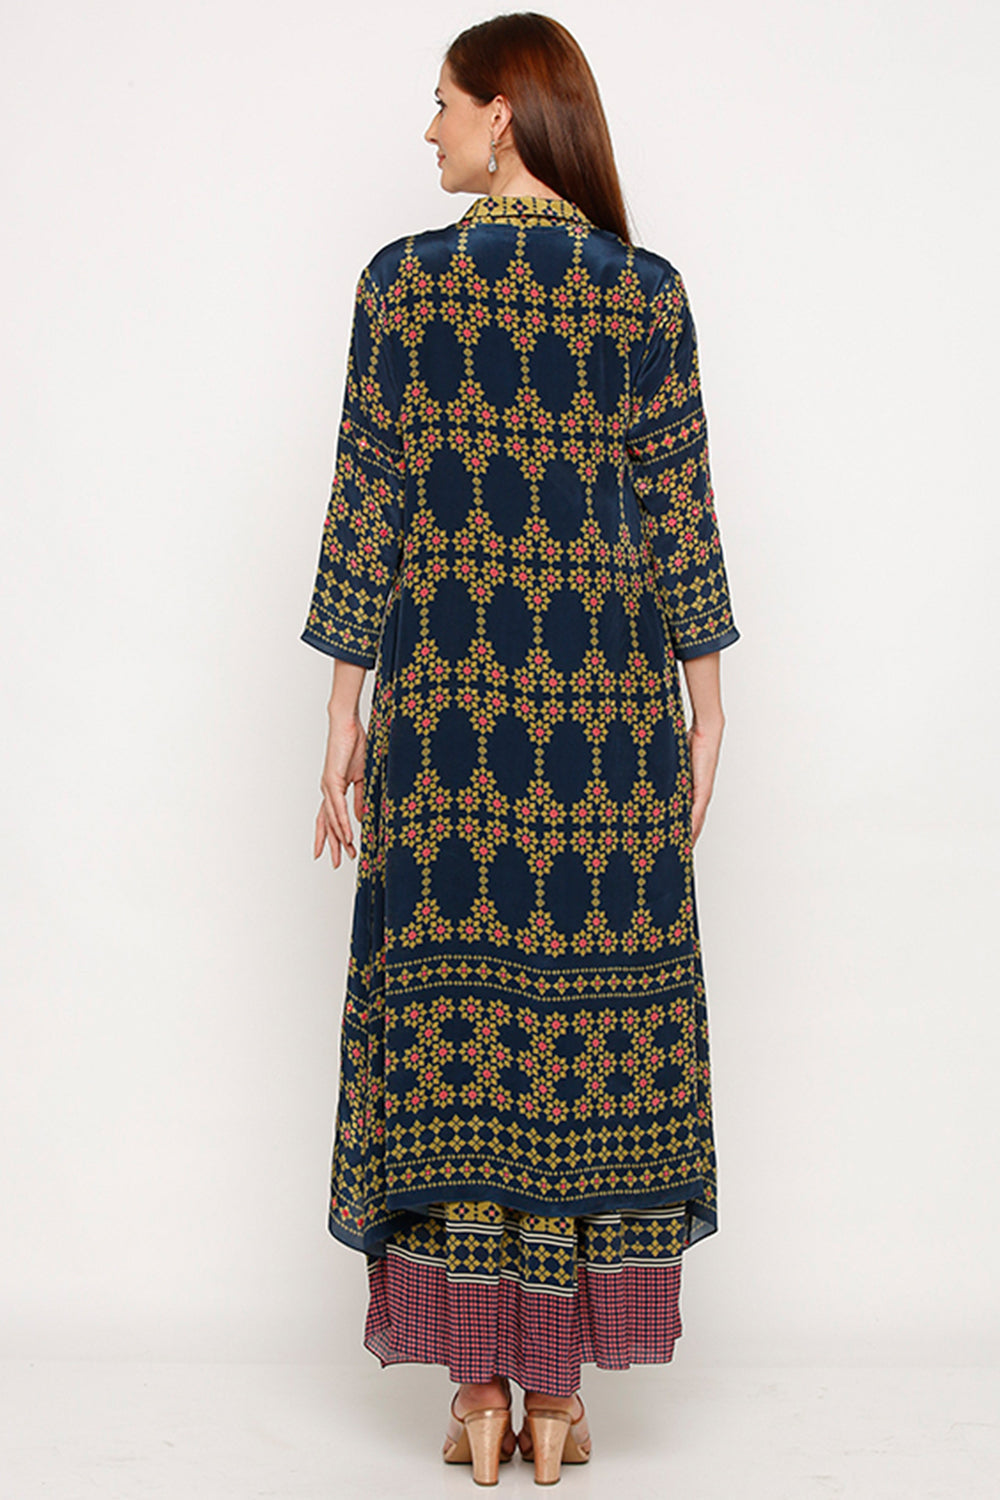 Tiraz Printed Long Dress With Jacket